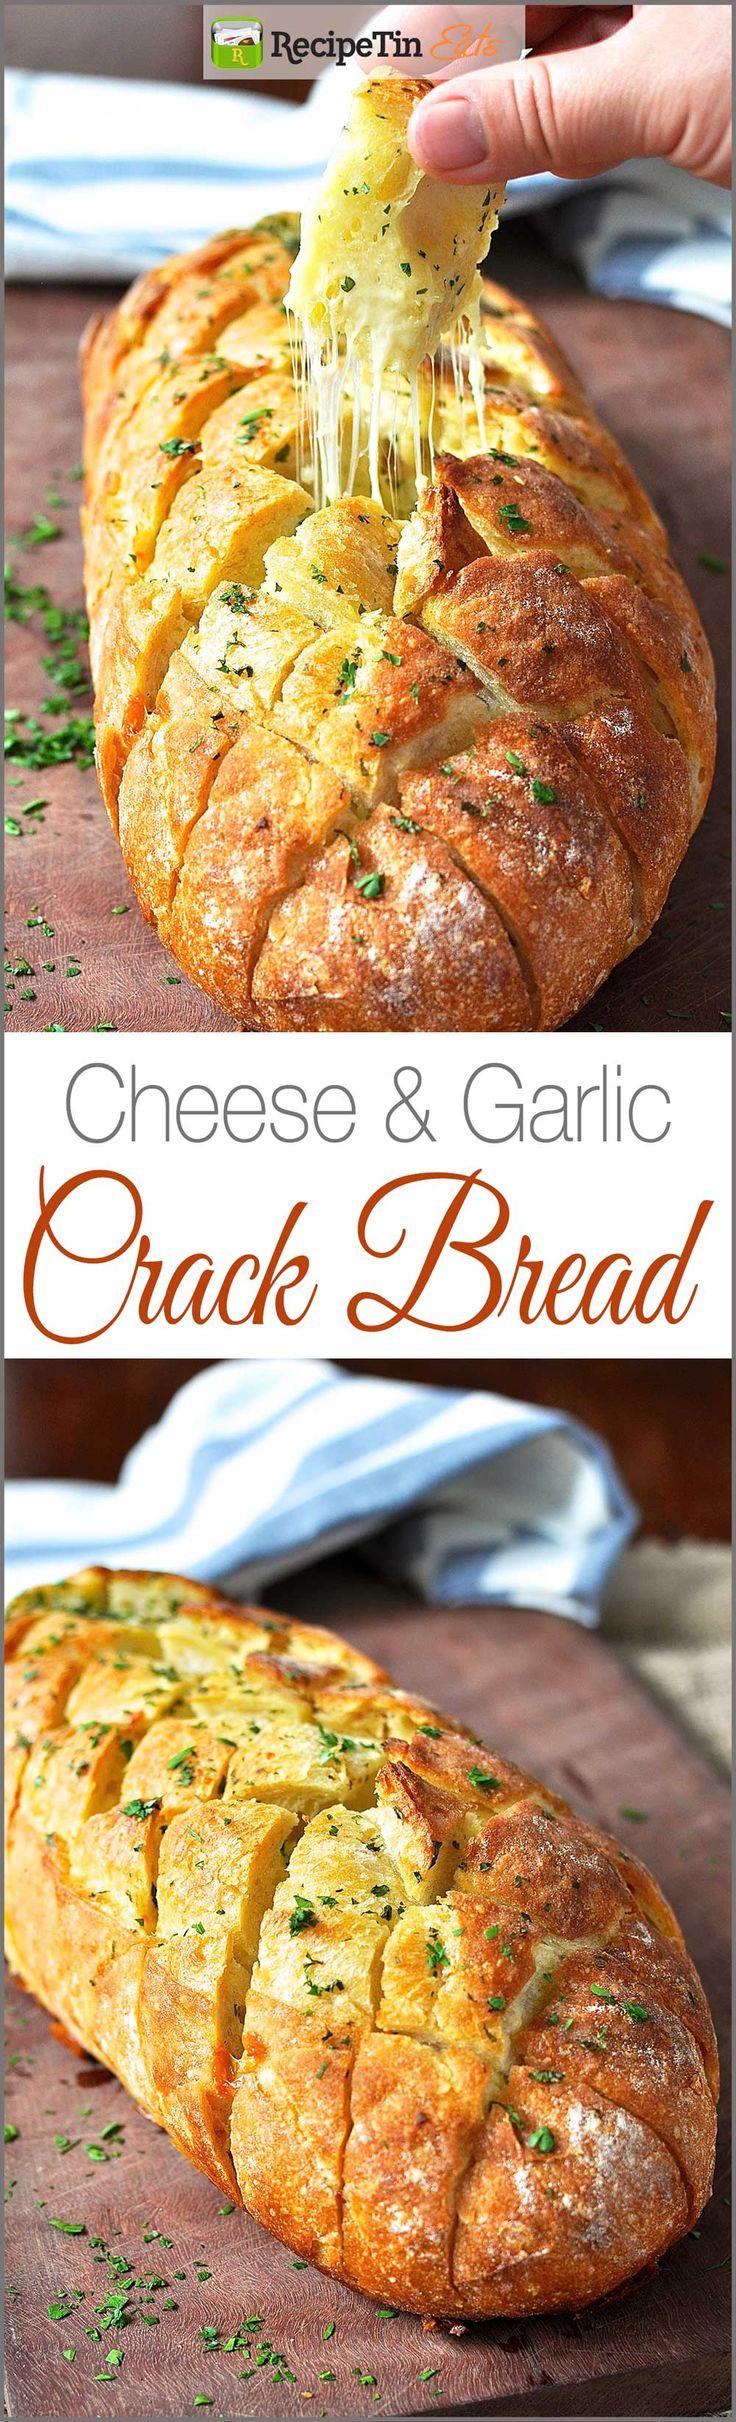 Wedding - Cheese And Garlic Crack Bread (Pull Apart Bread)